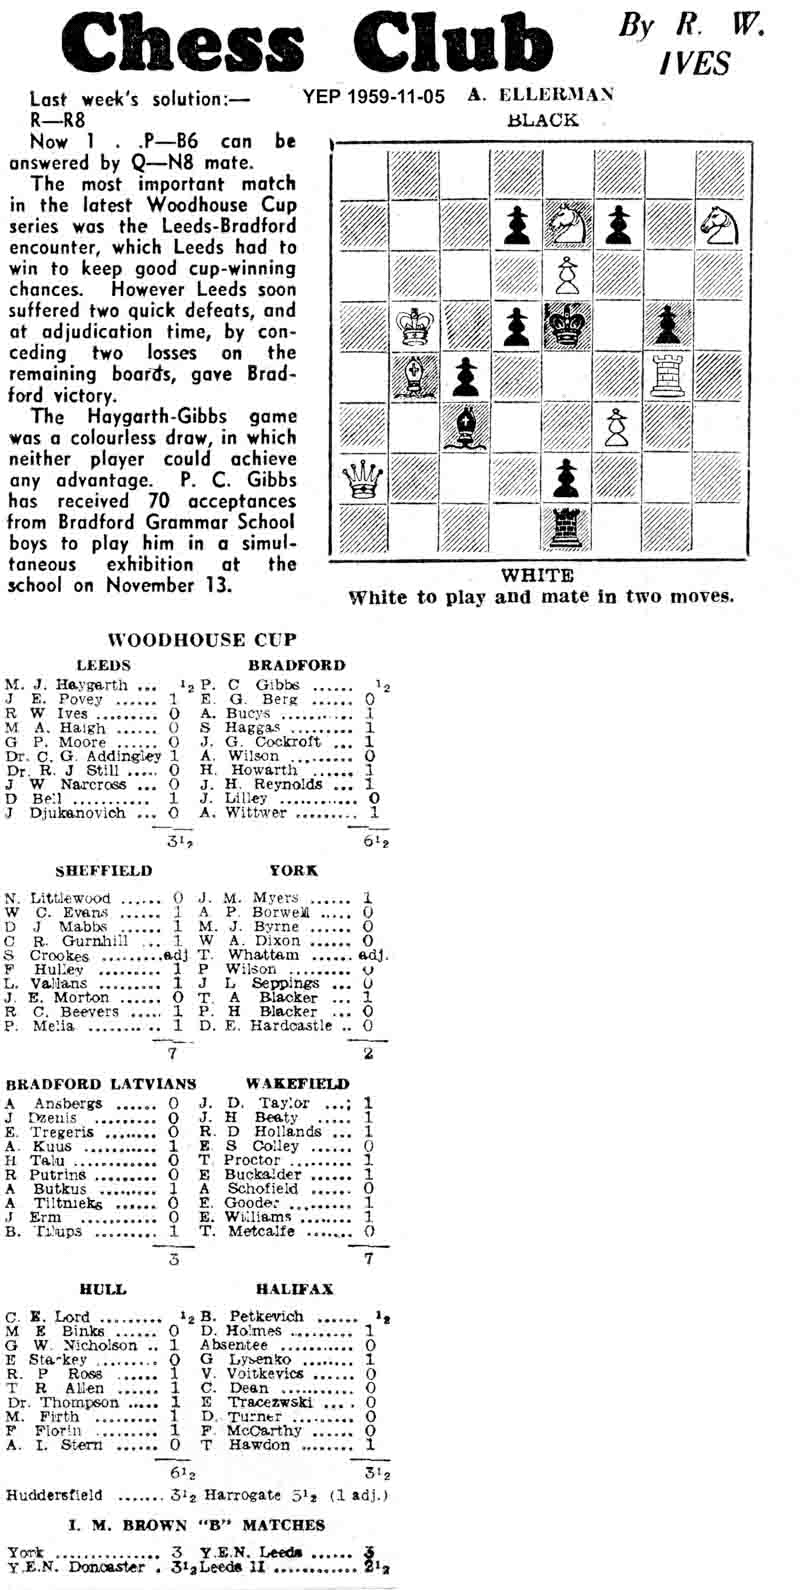 5 November 1959, Yorkshire Evening Post, chess column